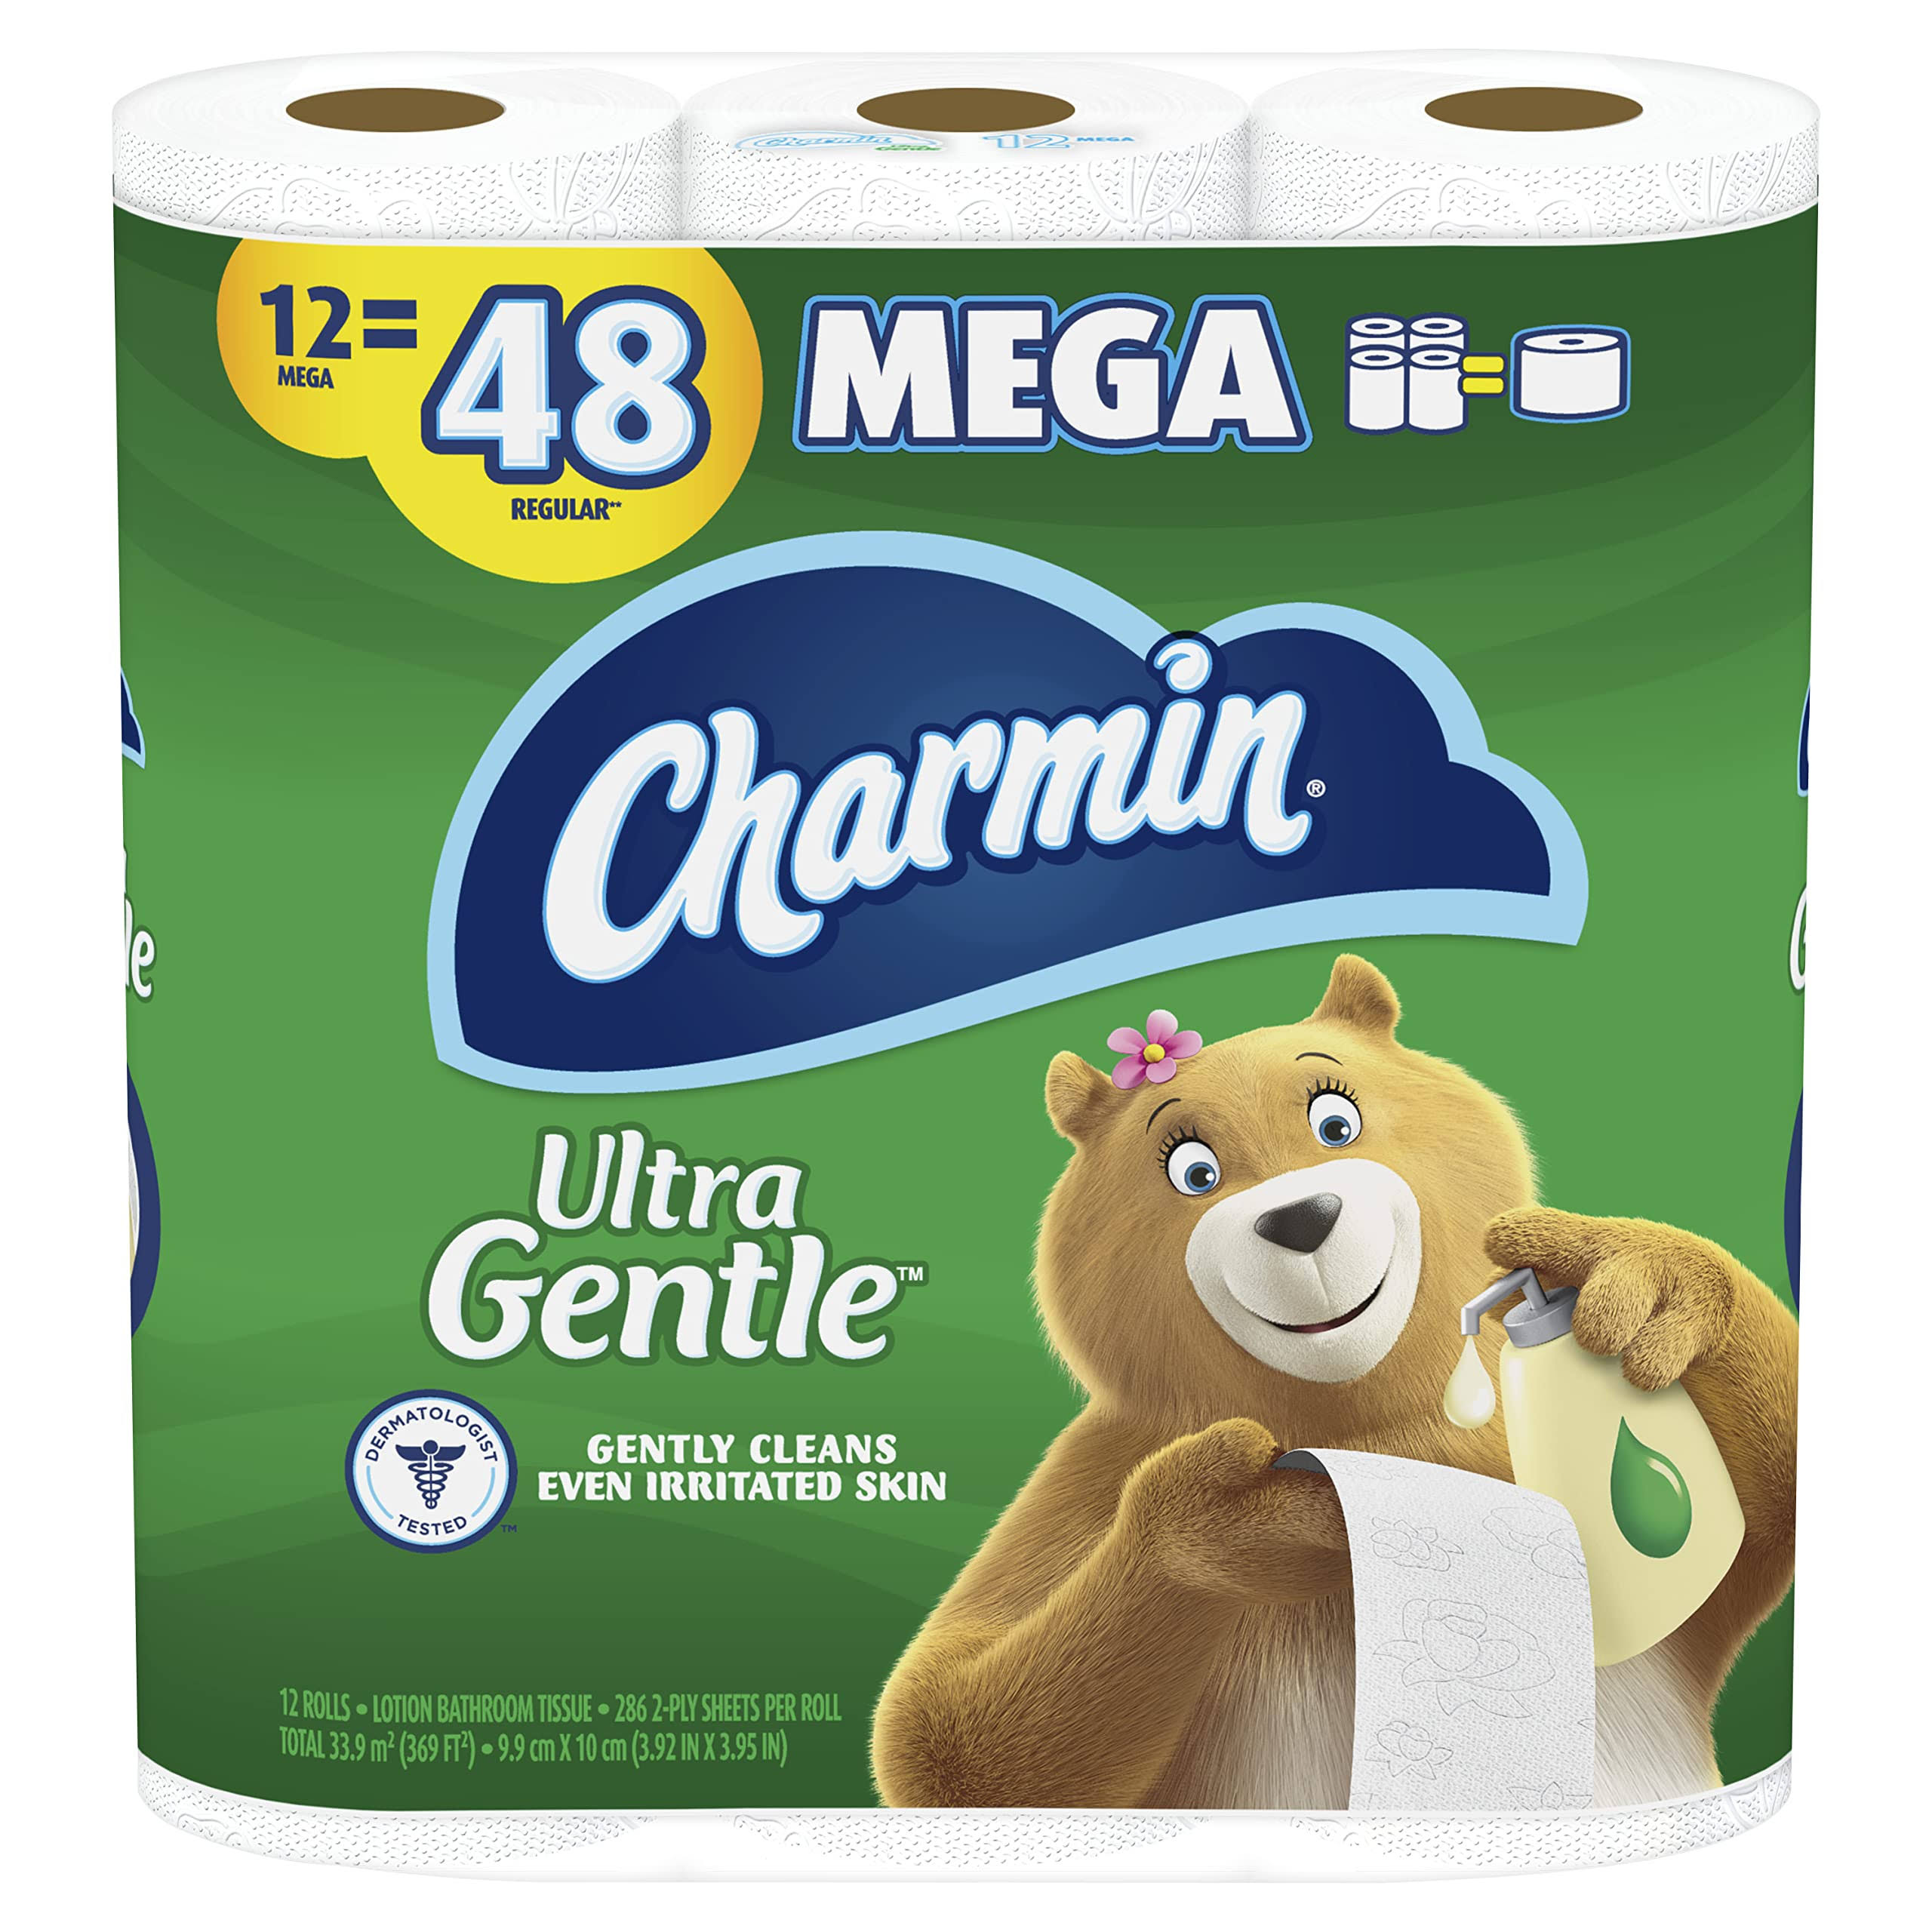 Charmin Lotion Bathroom Tissue, Mega, Ultra Gentle, 2-Ply - 12 rolls